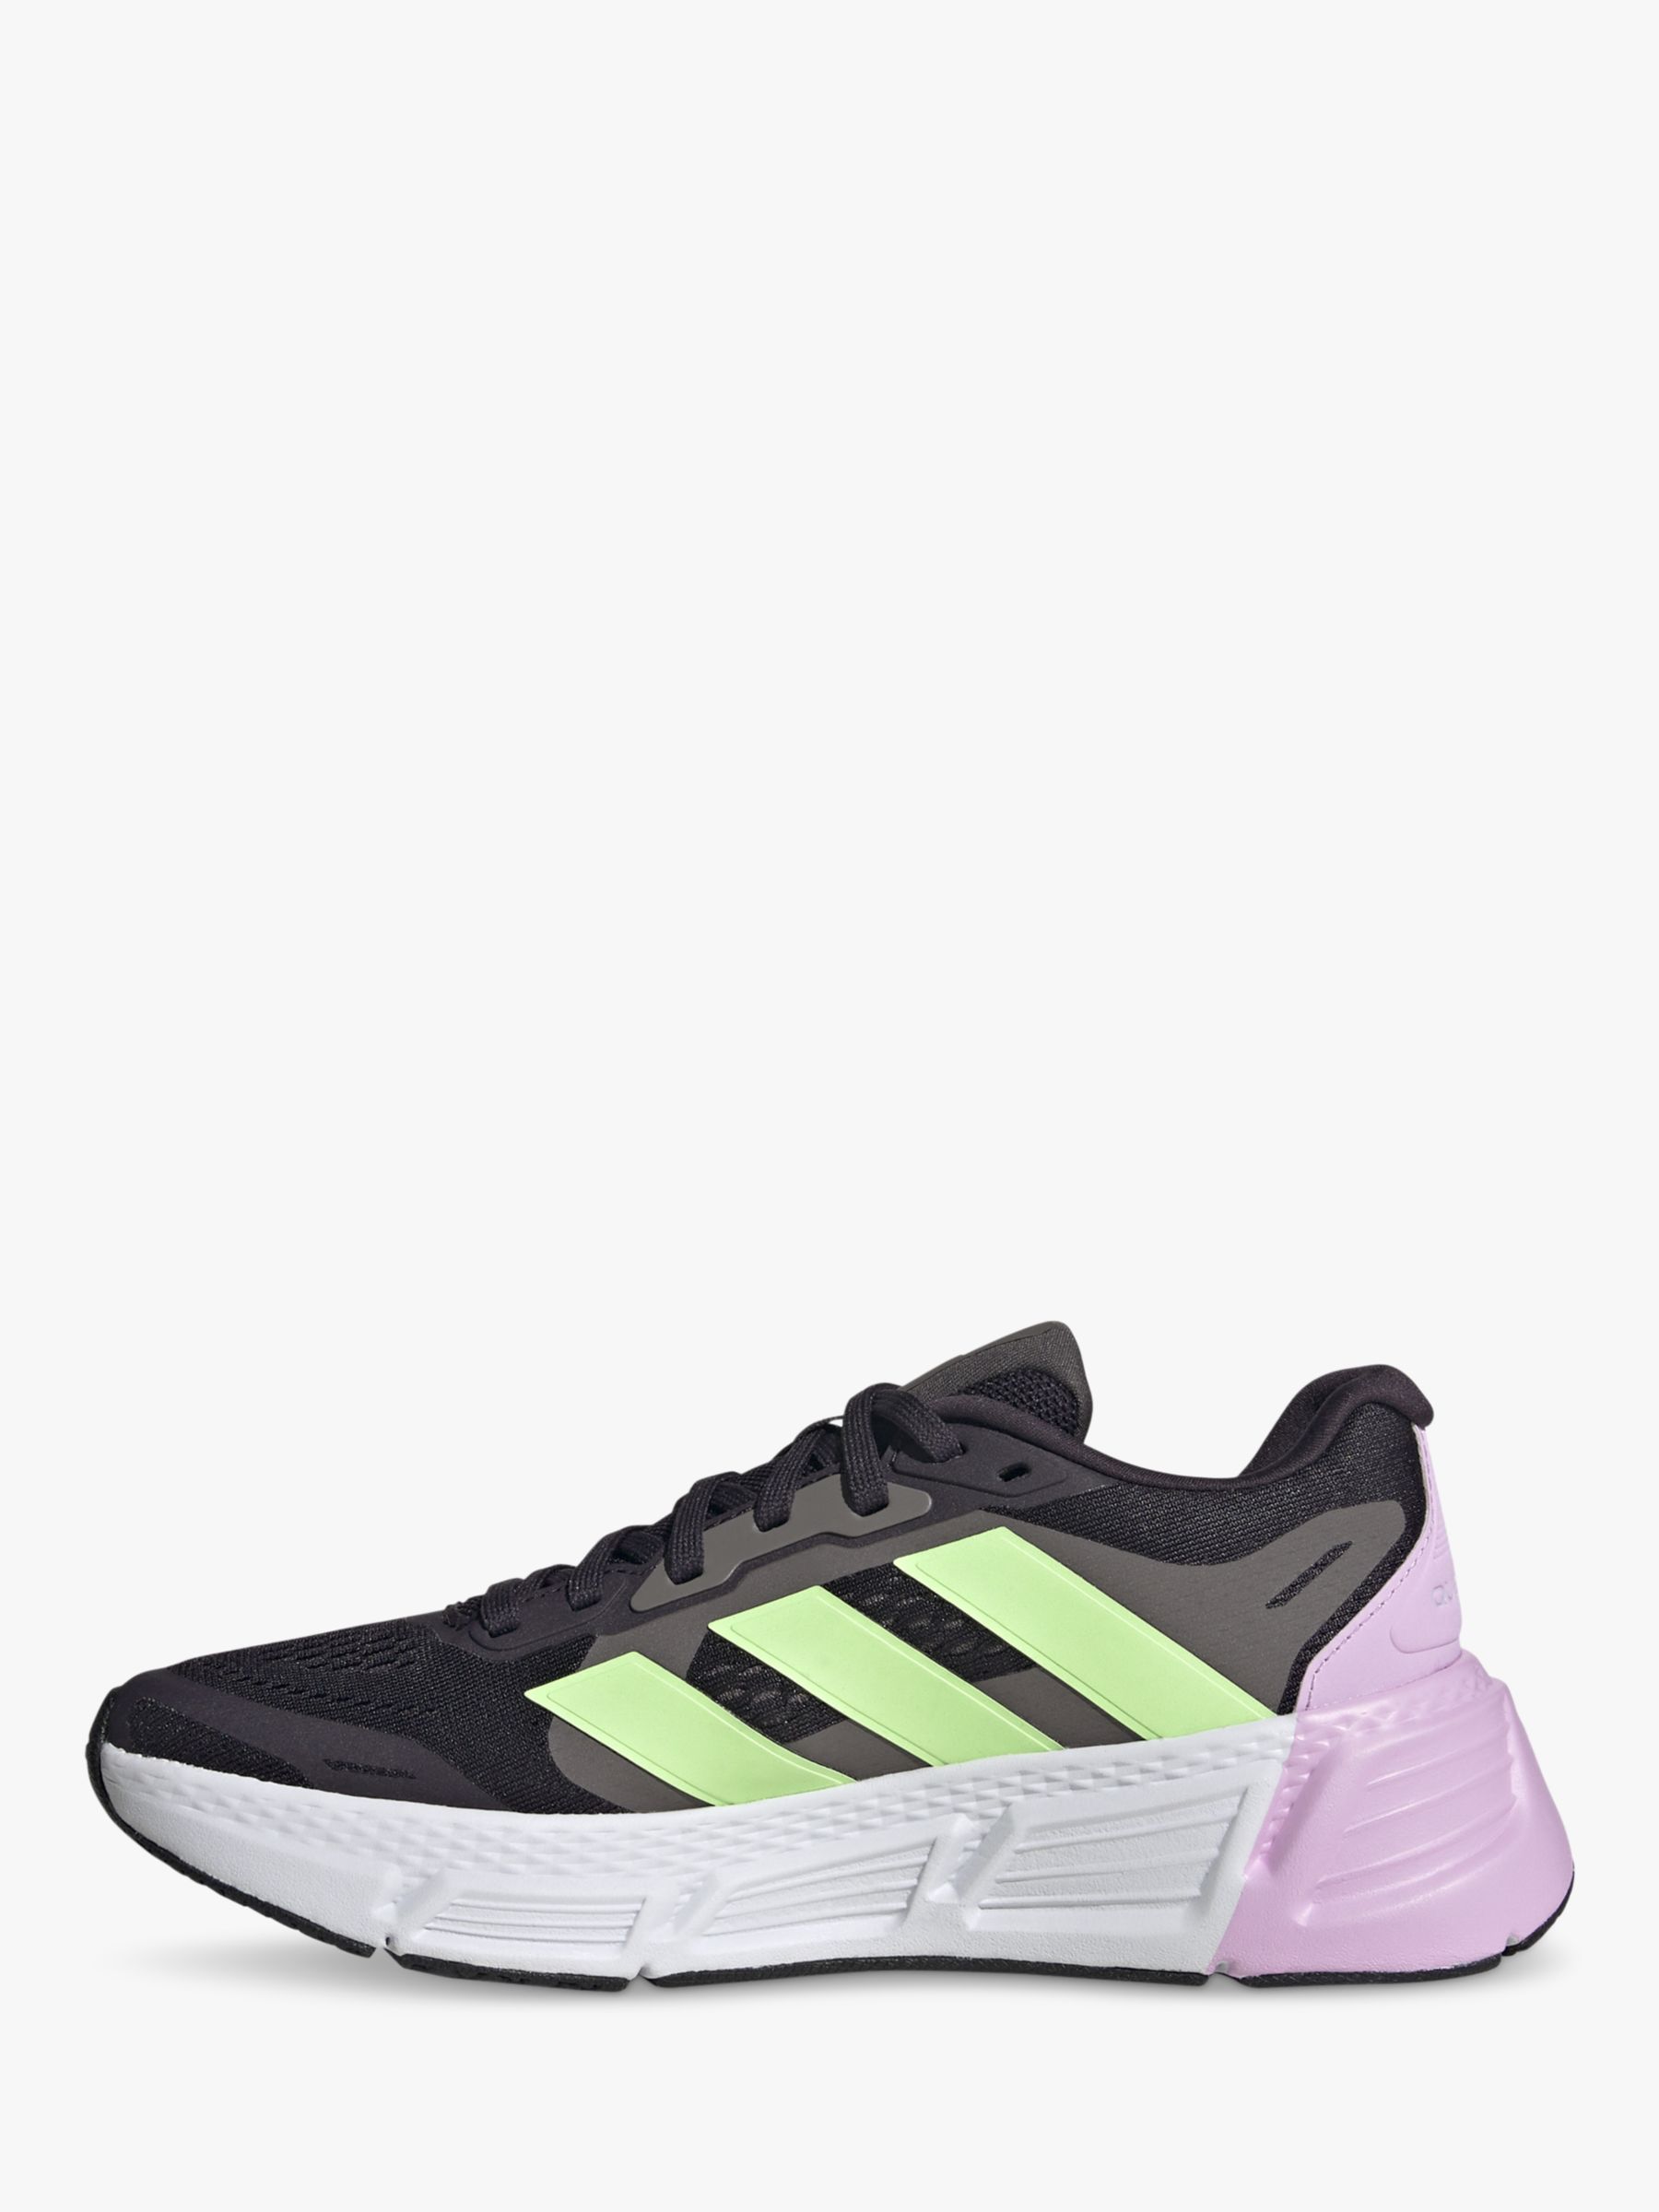 adidas Questar 2 Bounce Women's Running Shoes, Green/Lilac, 4